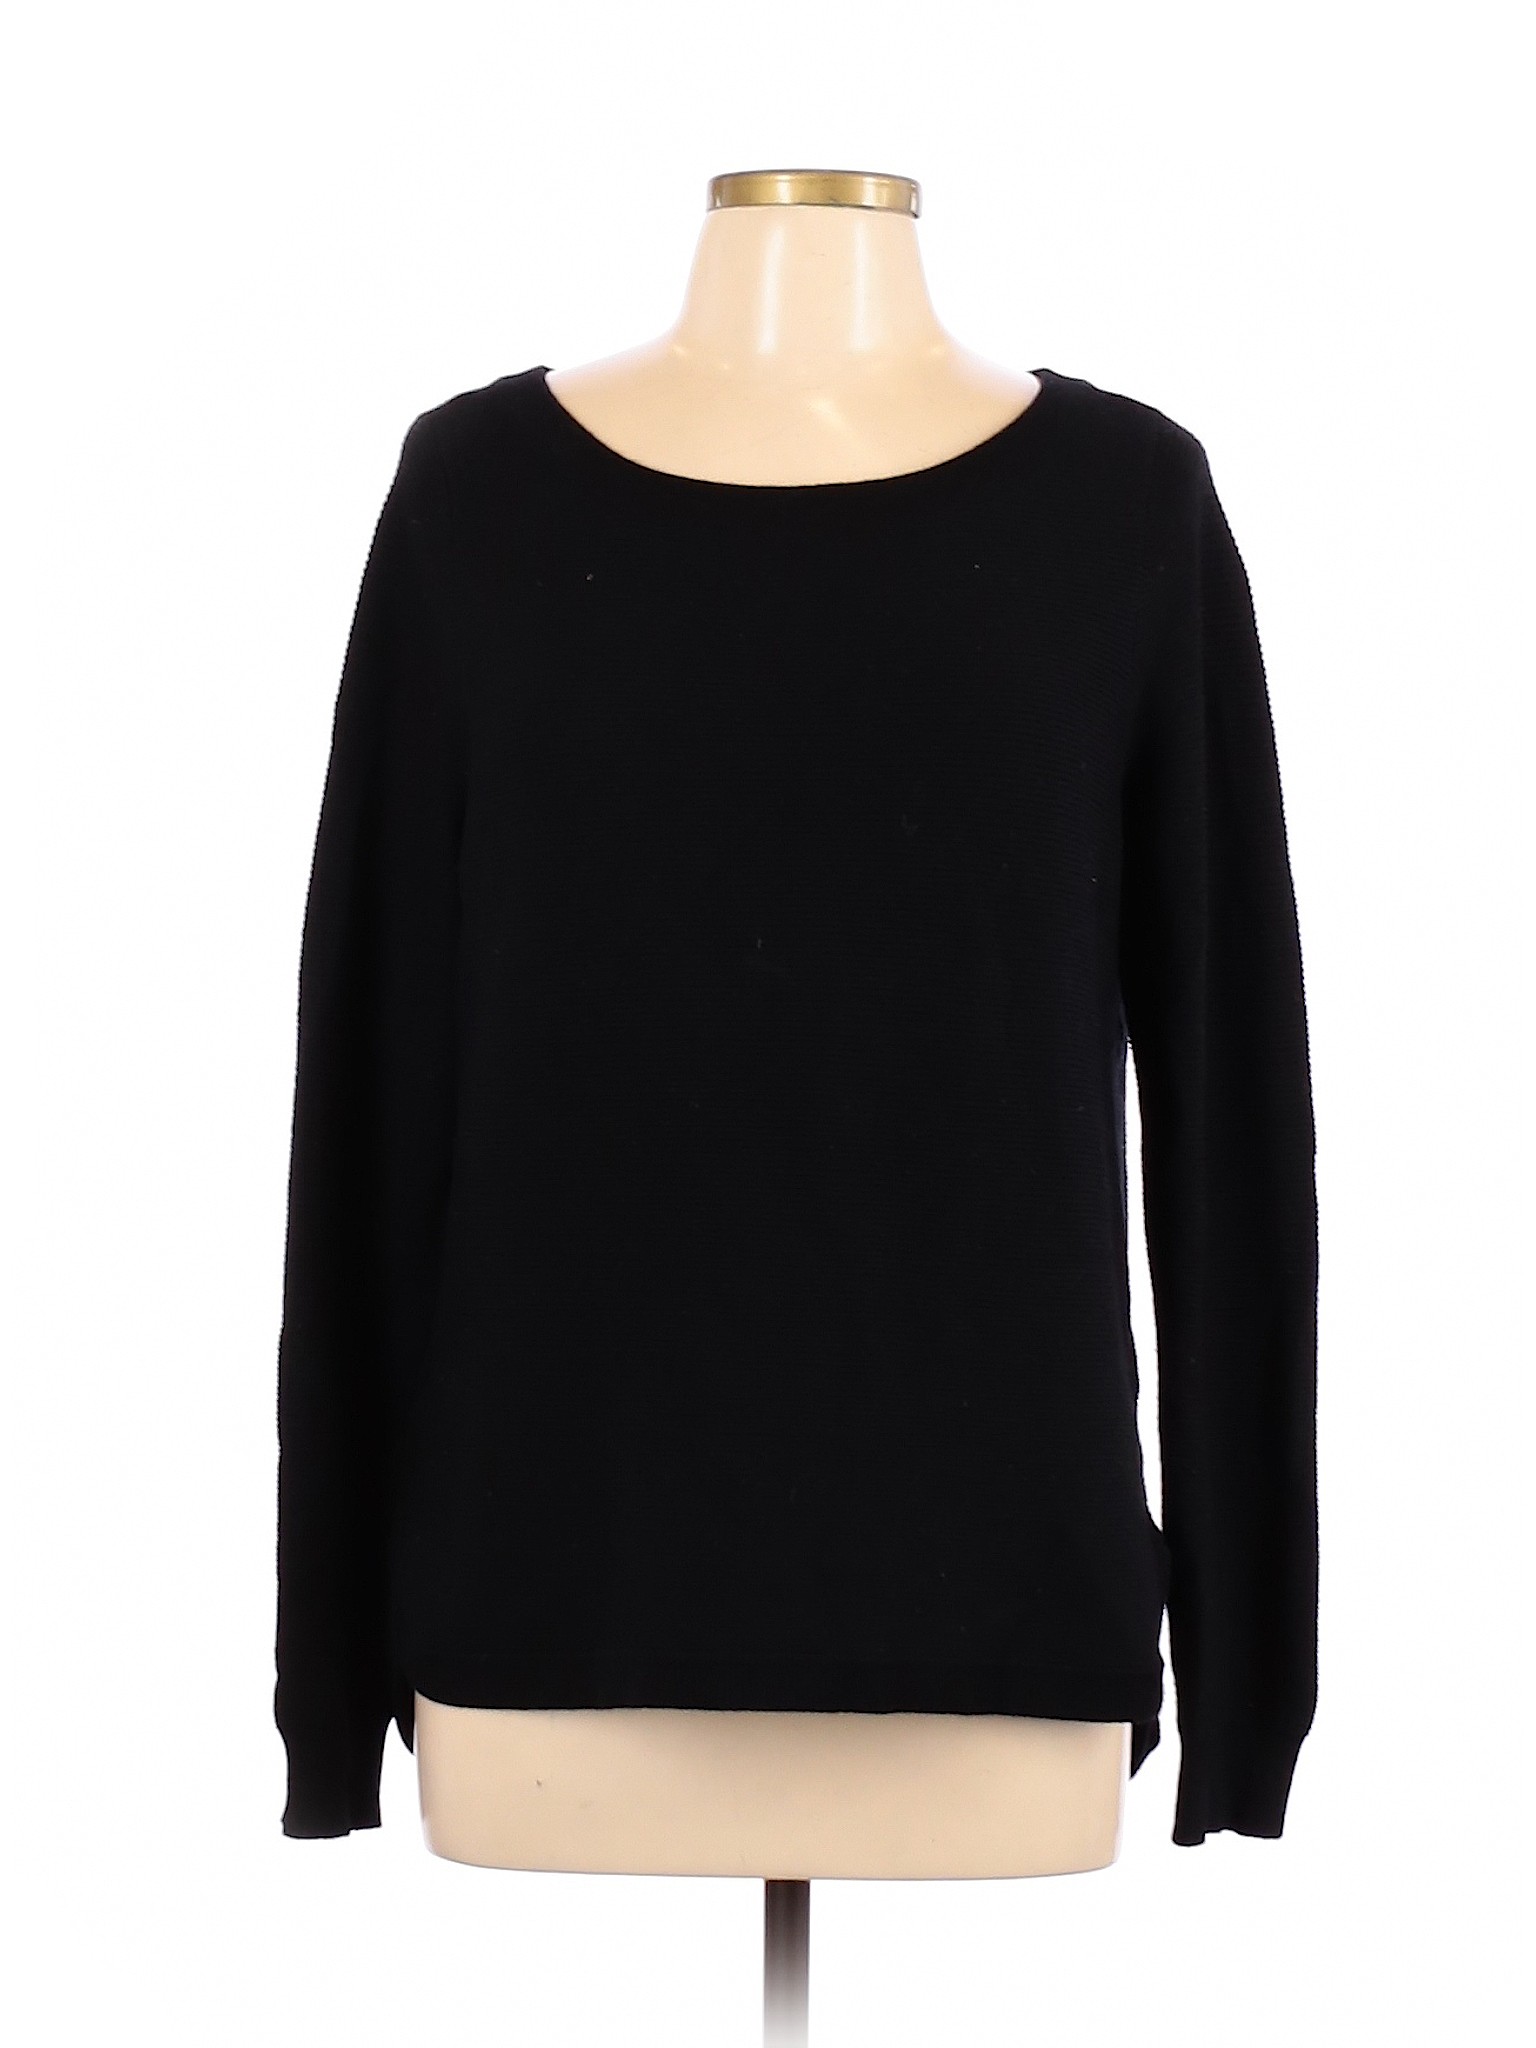 Cyrus Women Black Pullover Sweater L | eBay